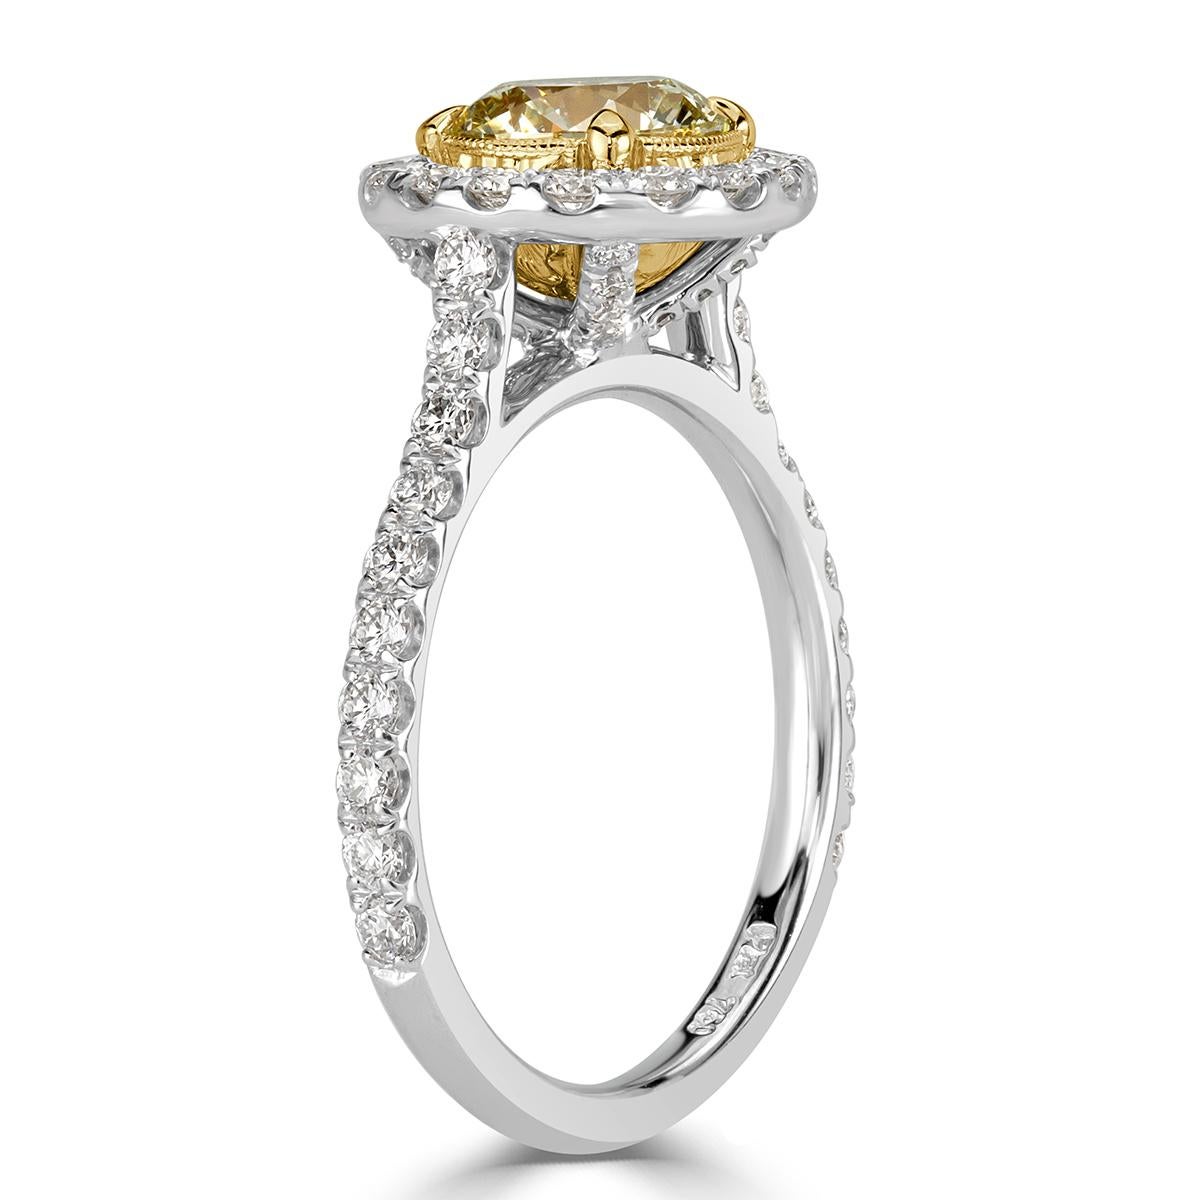 paris fury yellow diamond ring cost